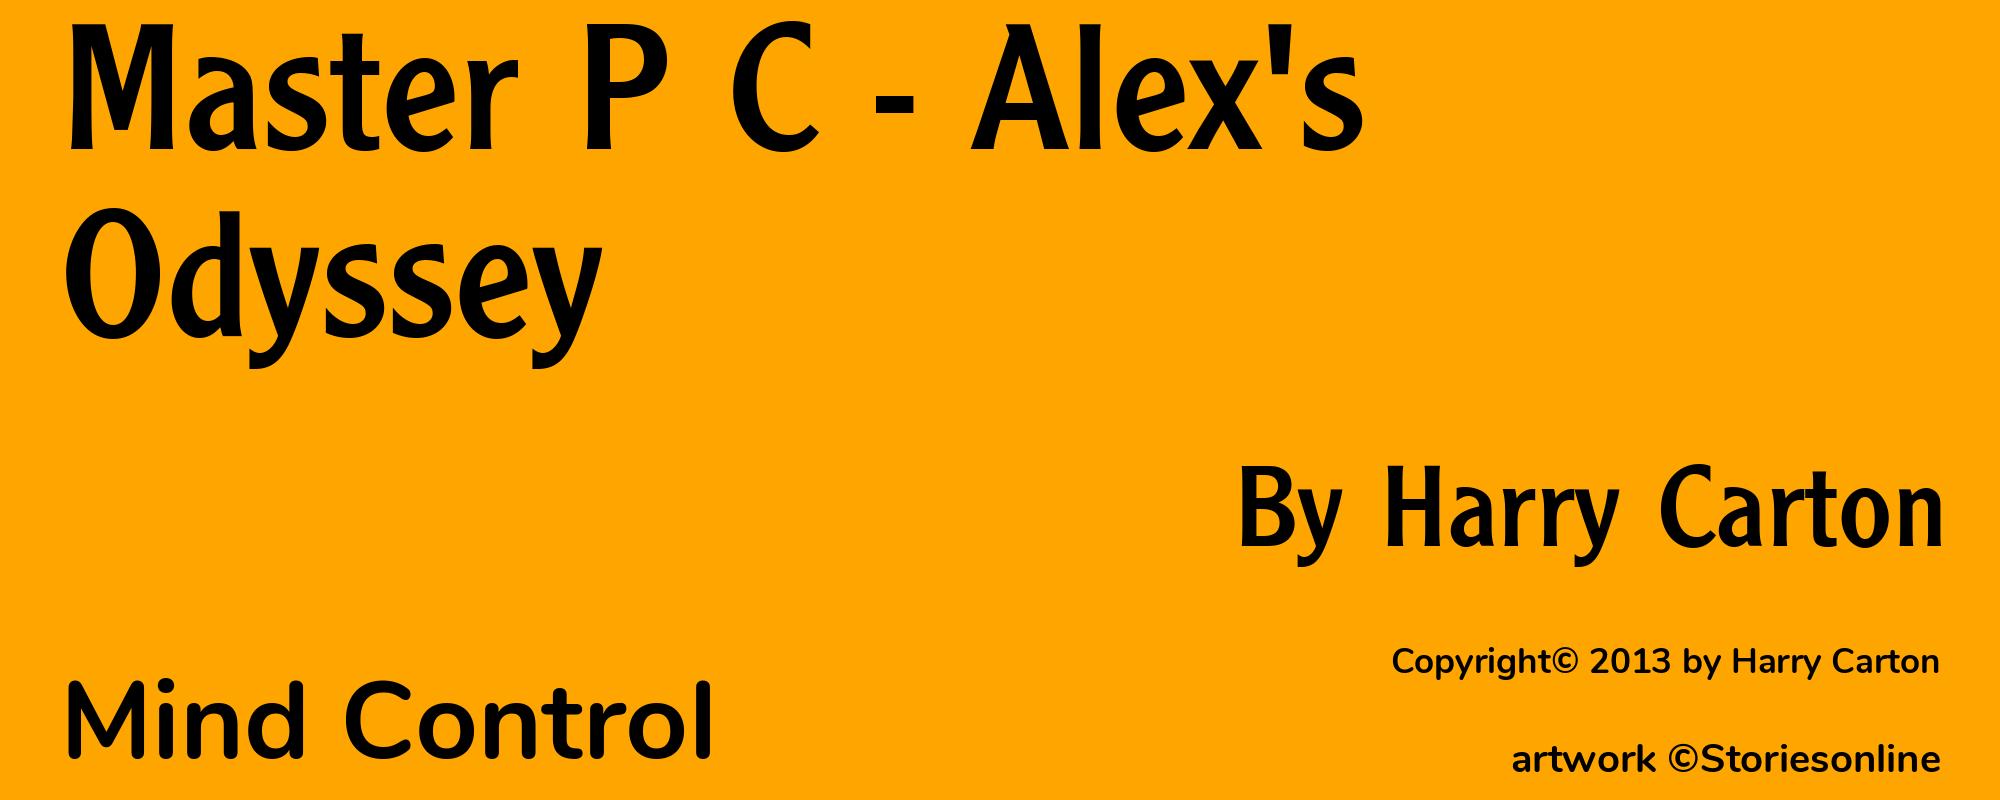 Master P C - Alex's Odyssey - Cover